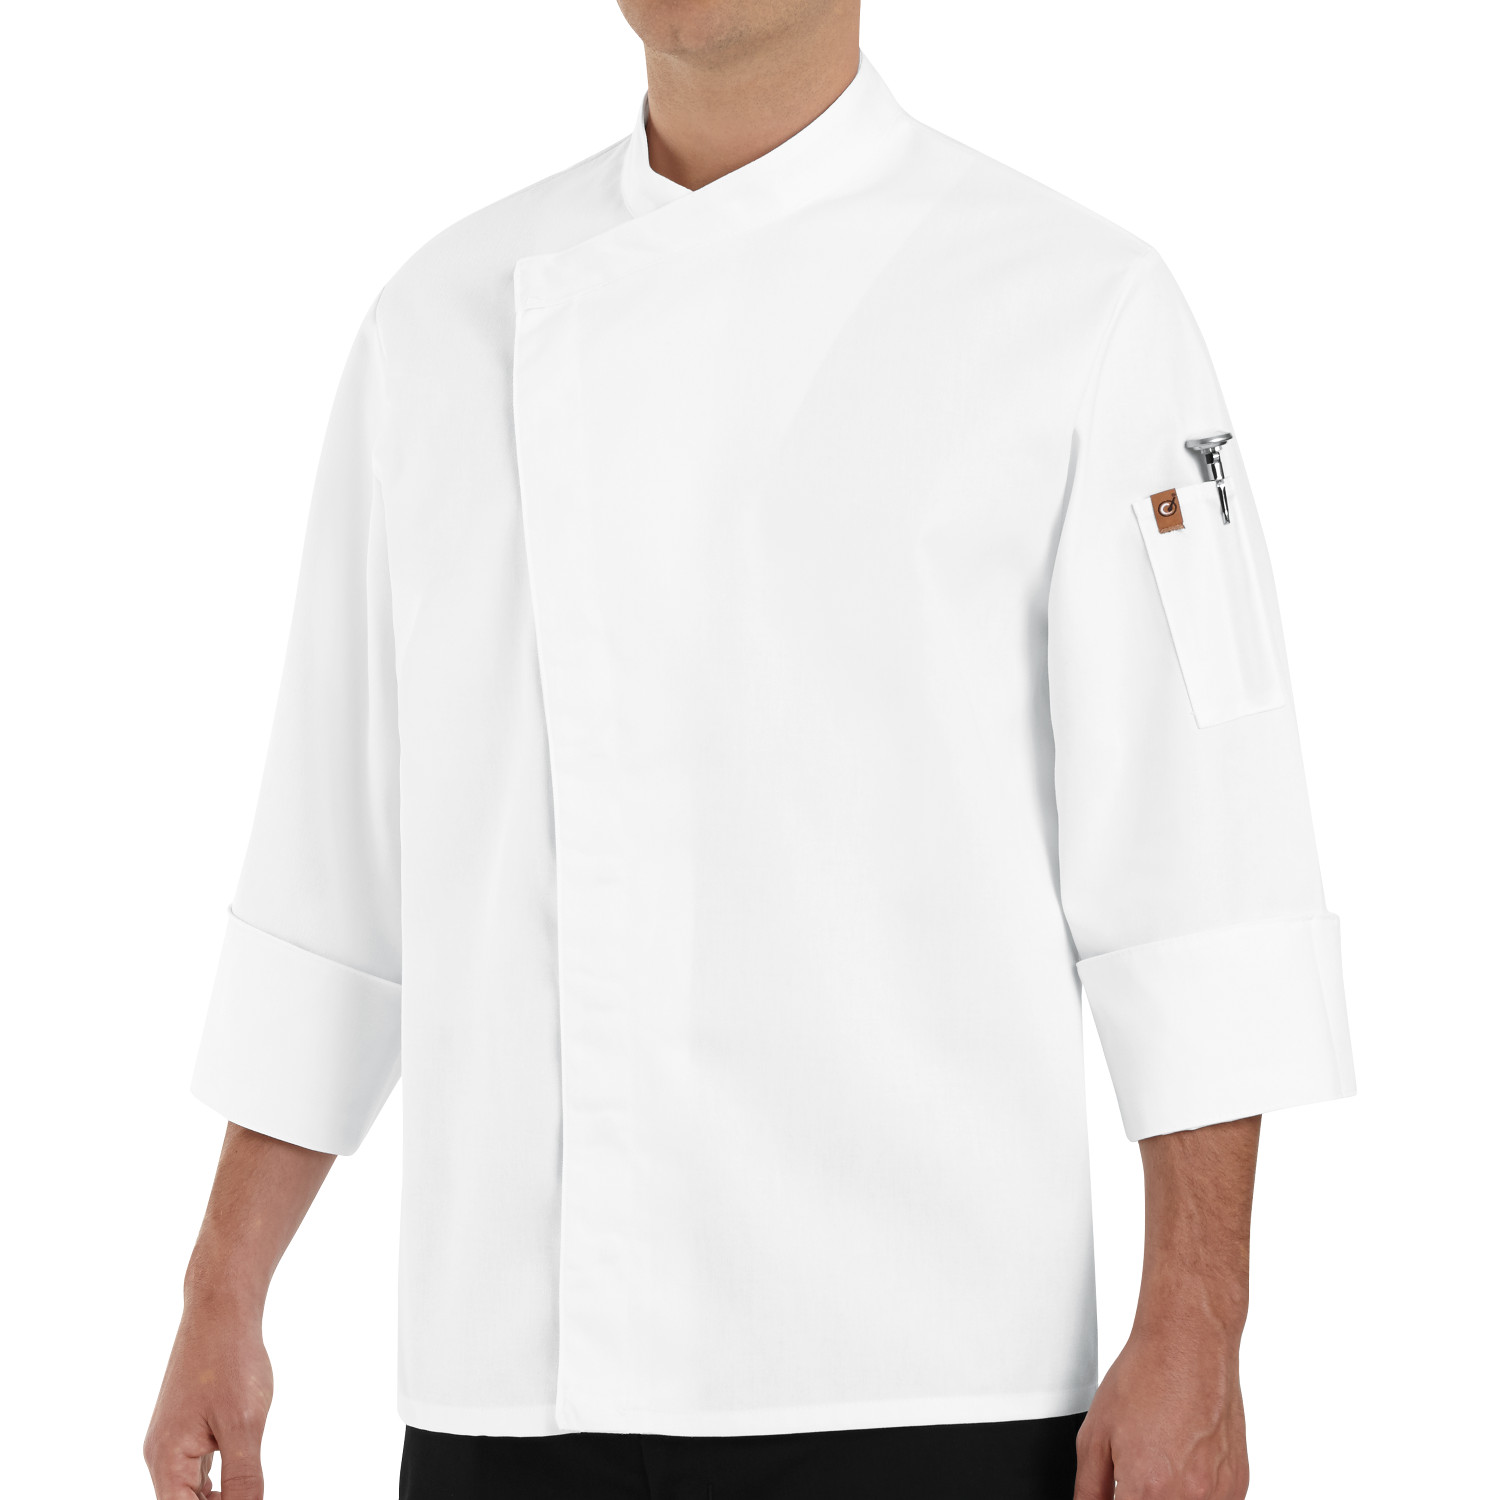 Tunic Chef Coat KT80WH